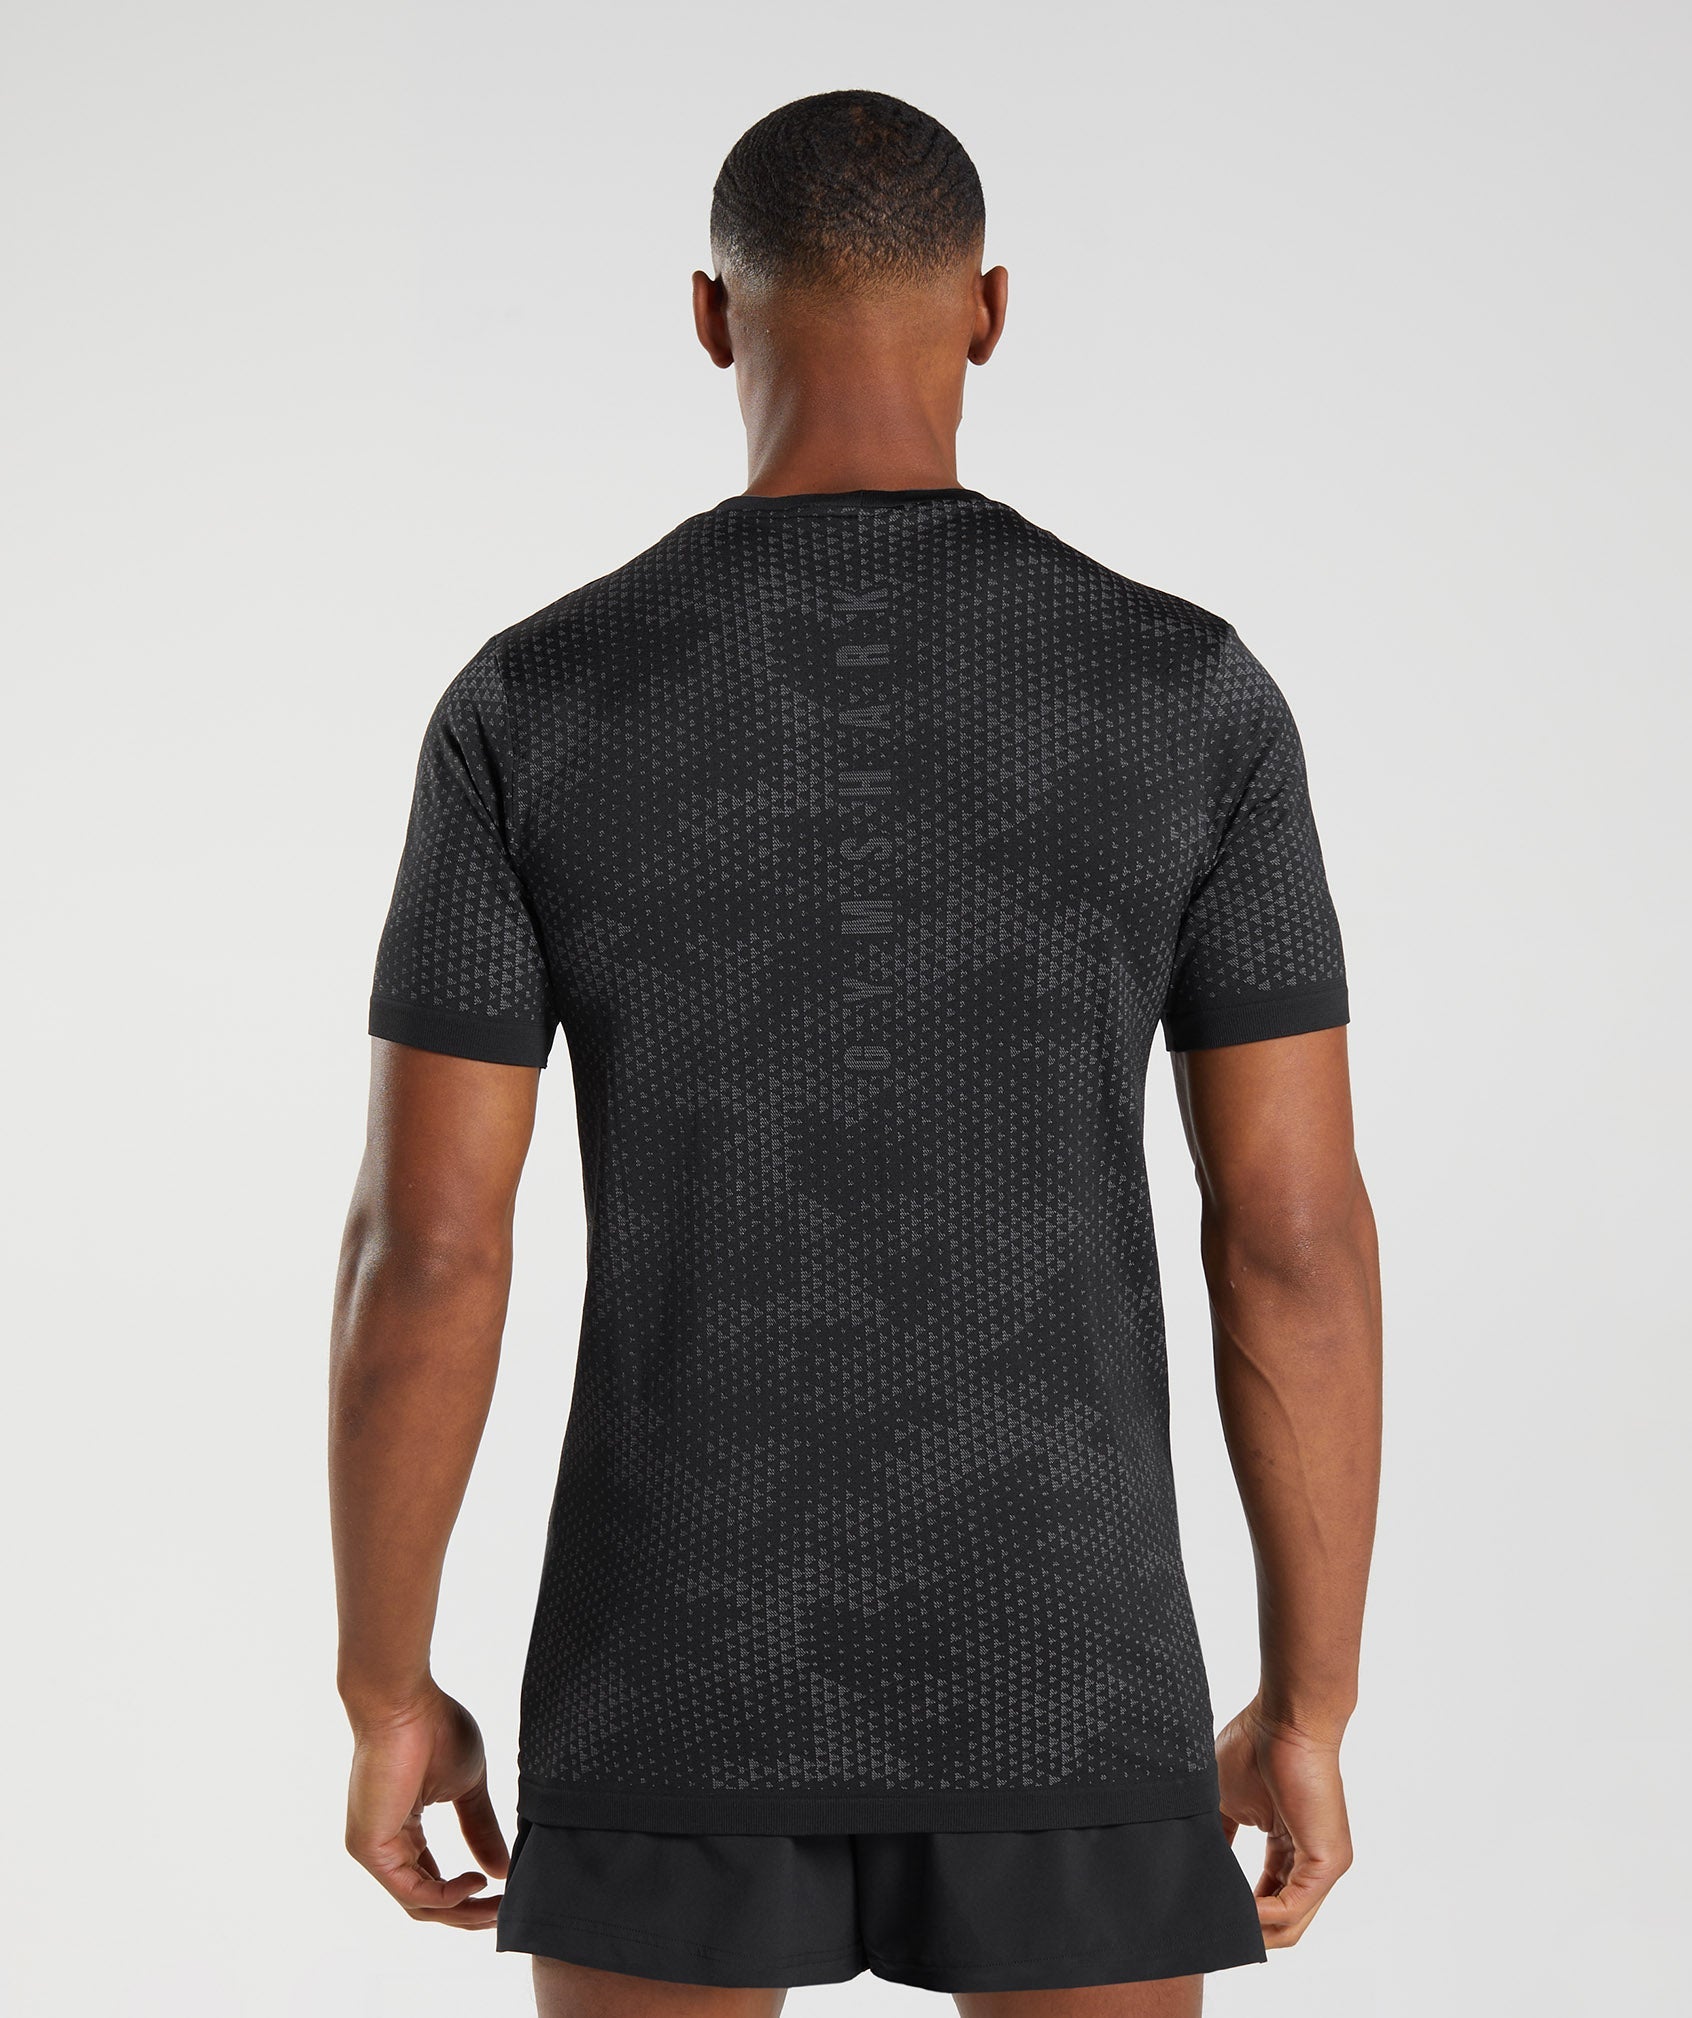 Sport Seamless T-Shirt in Black/Silhouette Grey